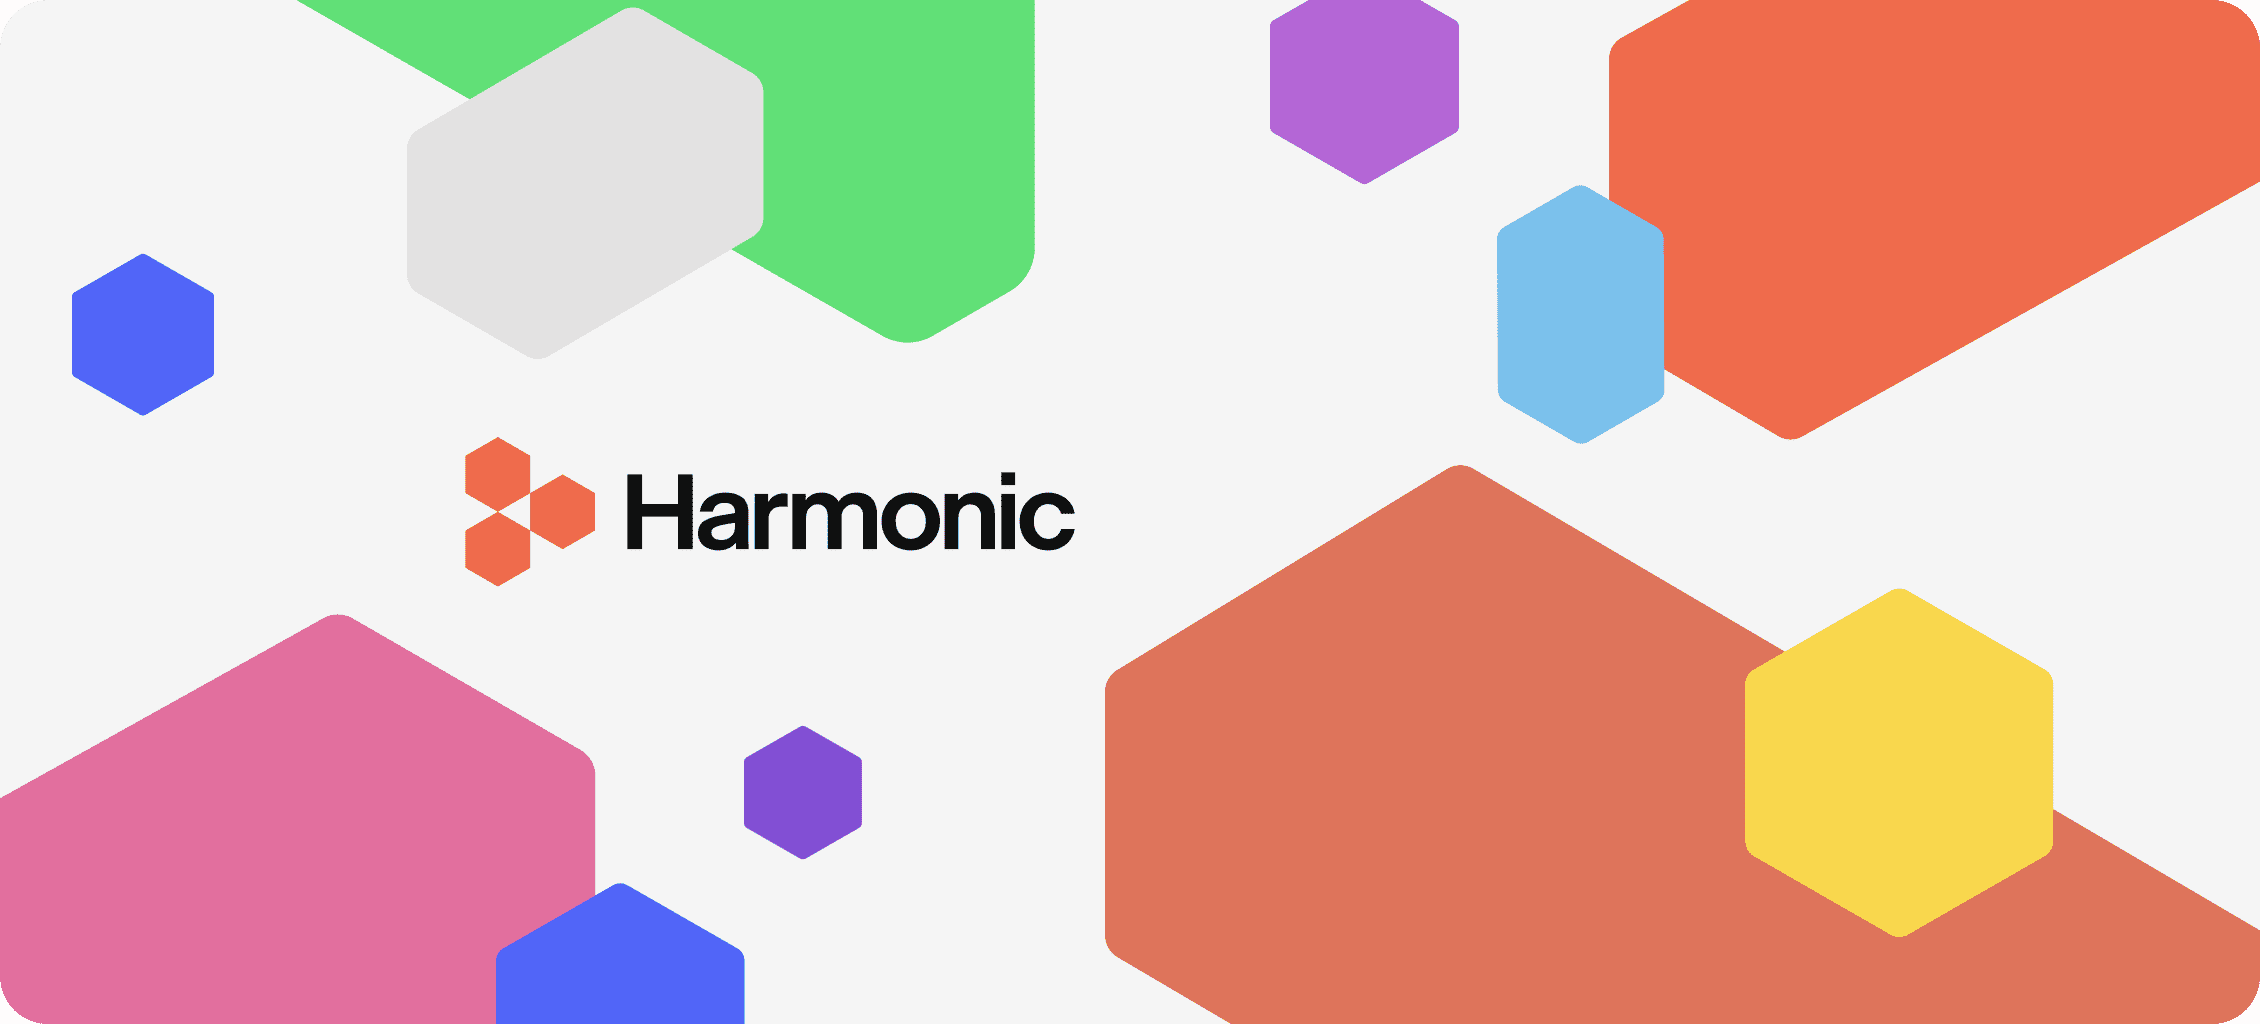 harmonic accel 23m sozo venturesmascarenhastechcrunch